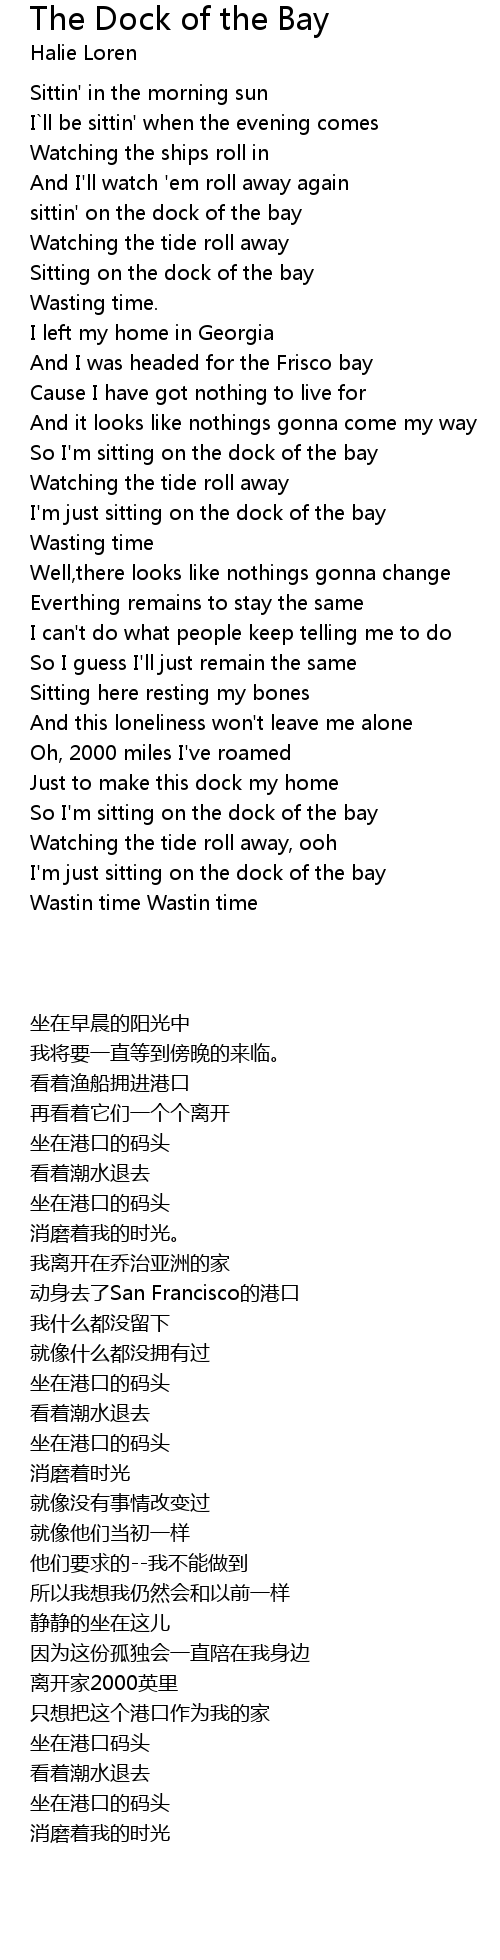 The Dock Of The Bay Lyrics Follow Lyrics